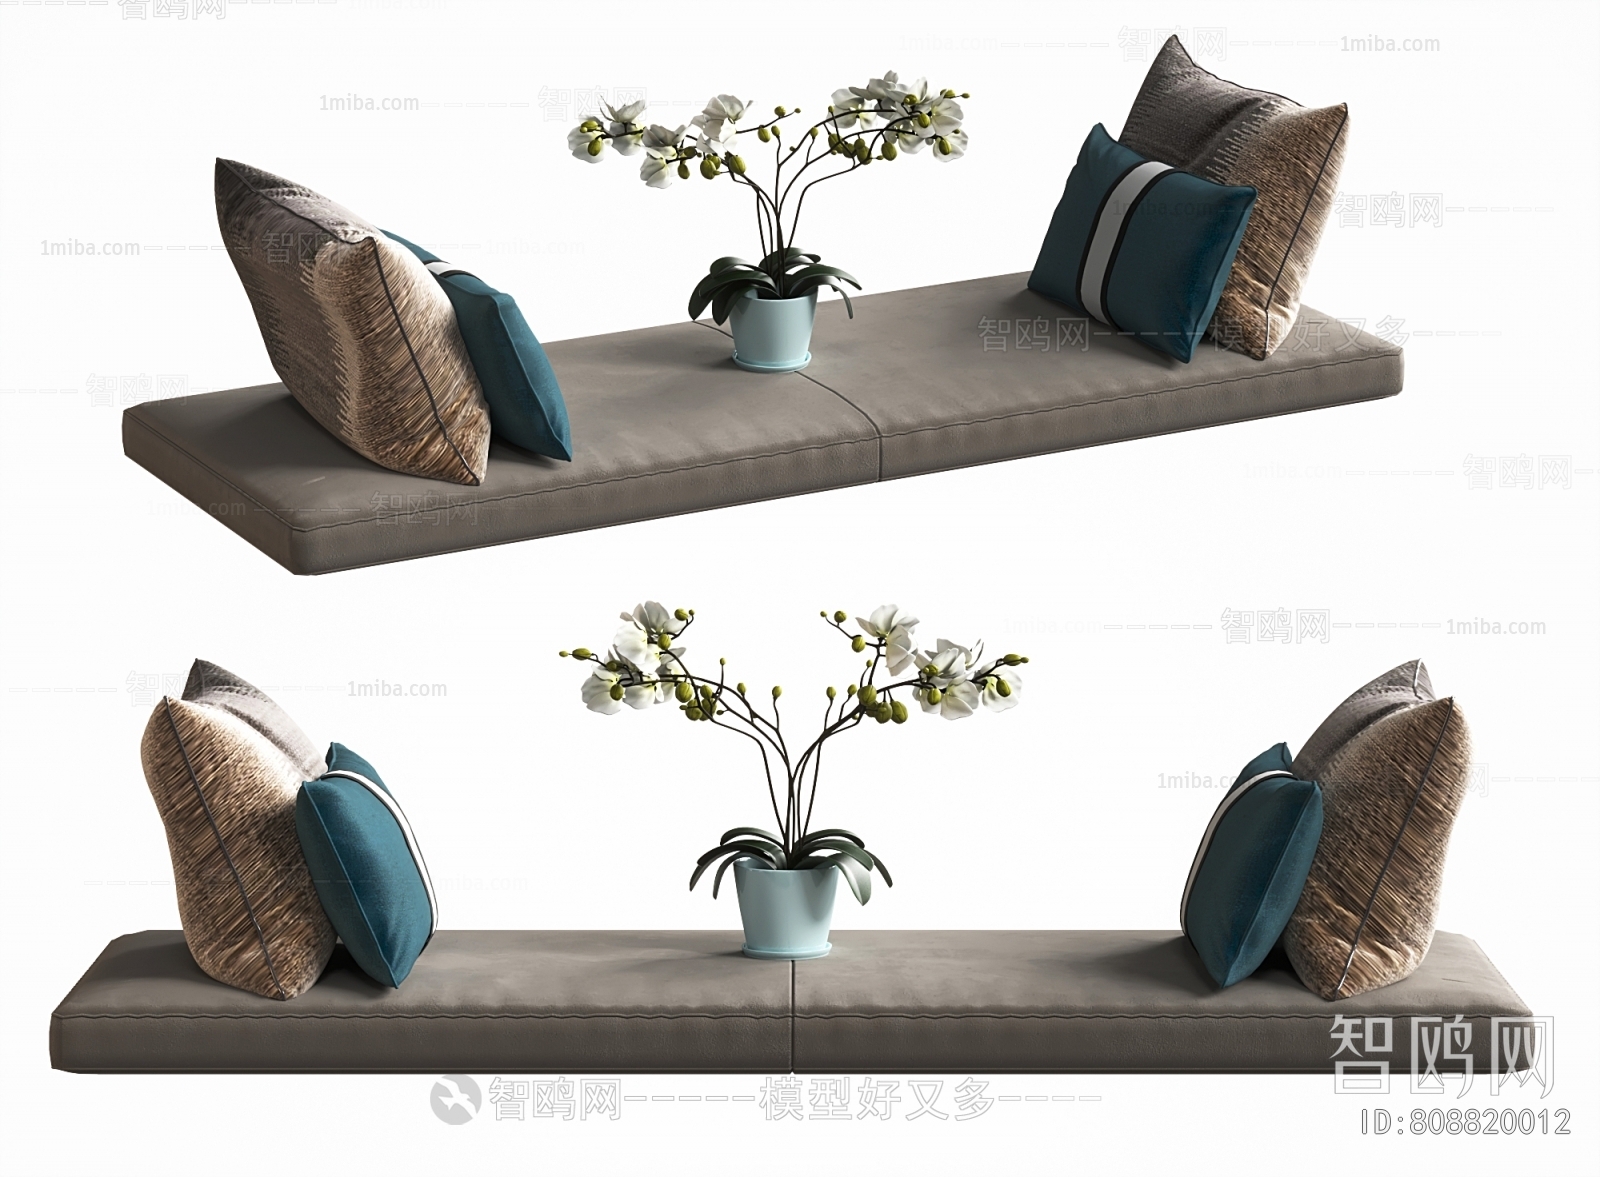 New Chinese Style Cushion